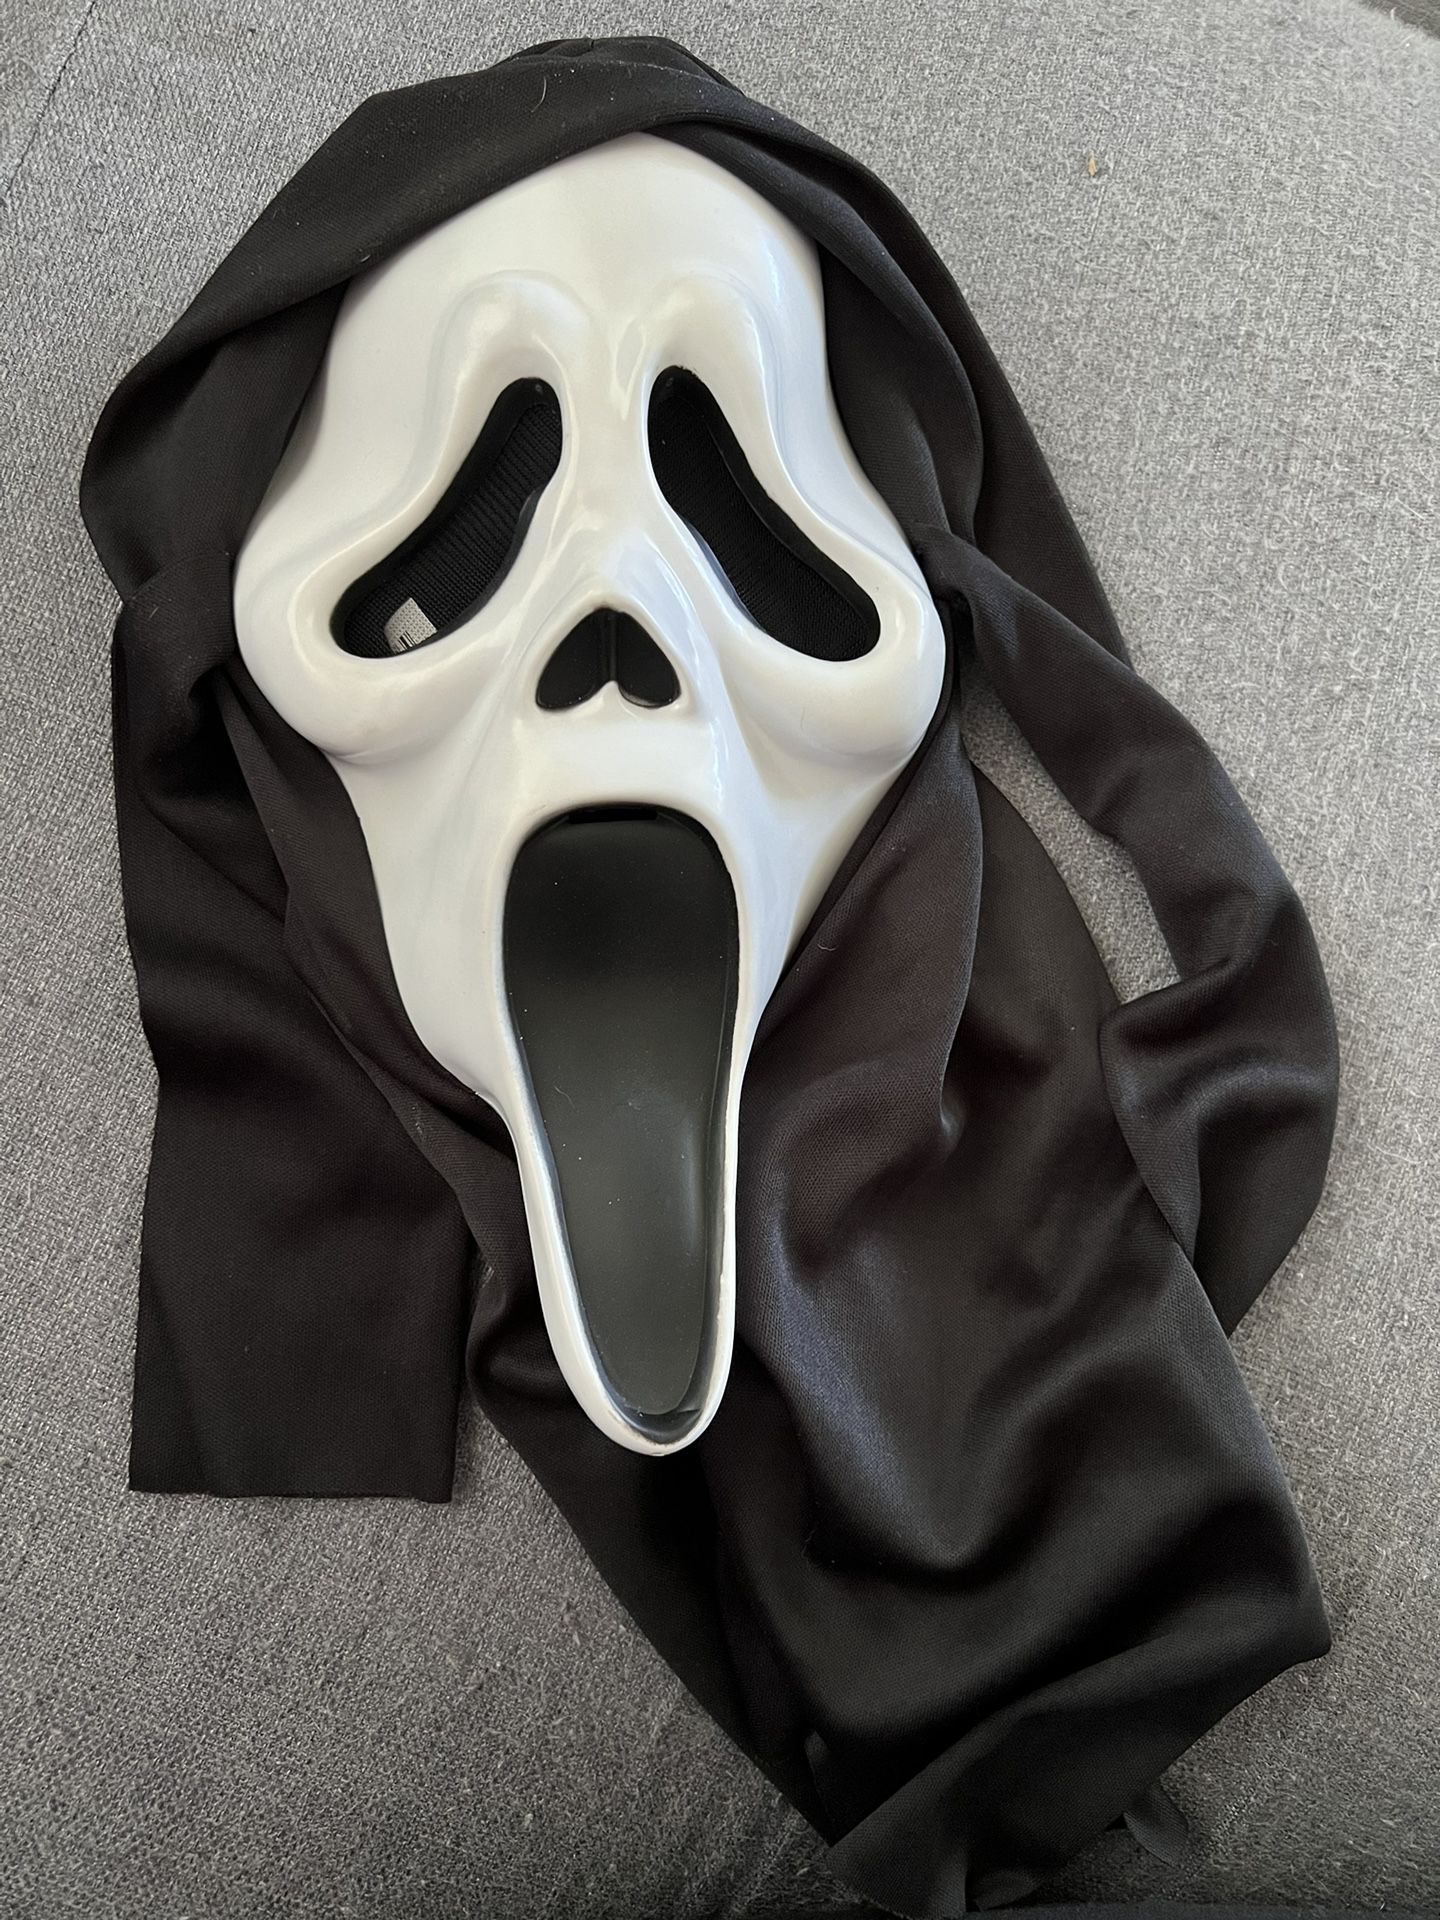 Scream Halloween Mask - Not Vintage 